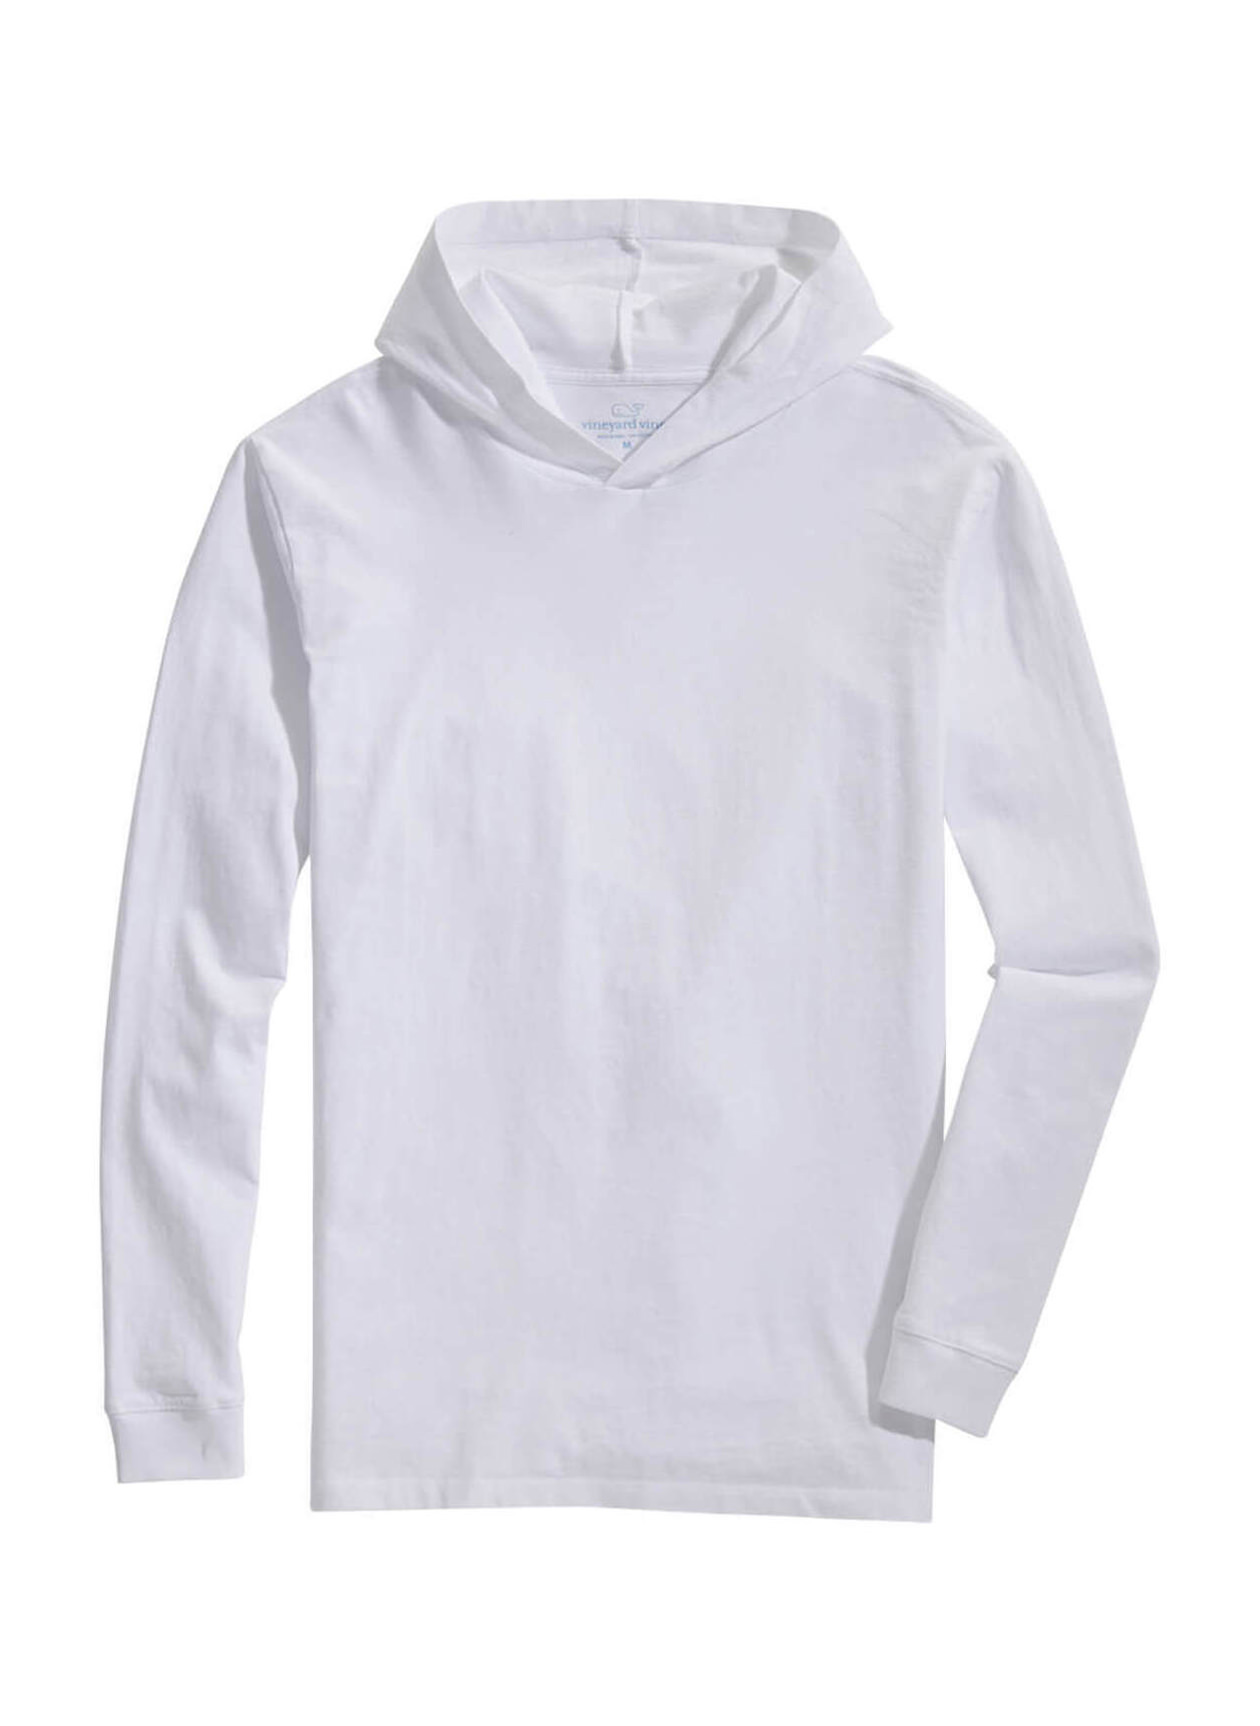 Embroidered Vineyard Vines Men's White Cap Hoodie T-Shirt